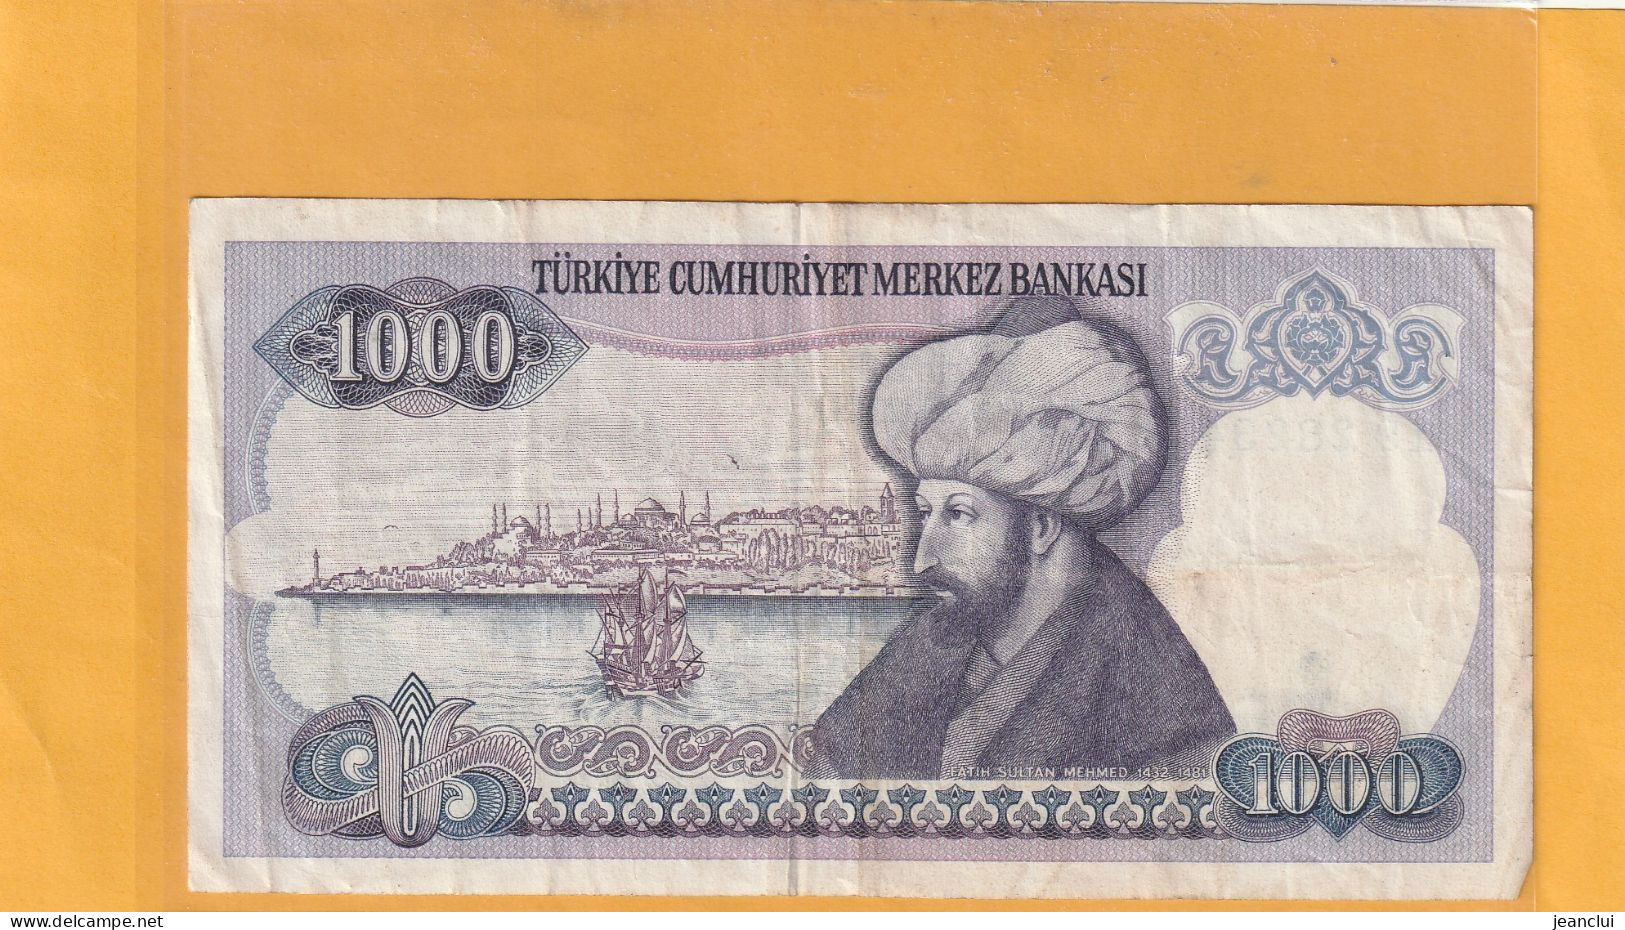 TURKIYE CUMHURIYET MERKEZ BANKASI . 1.000 LIRA . 14 OCAK 1970  . N°  A19 282347 .  2 SCANNES  .  BILLET USITE - Turquia